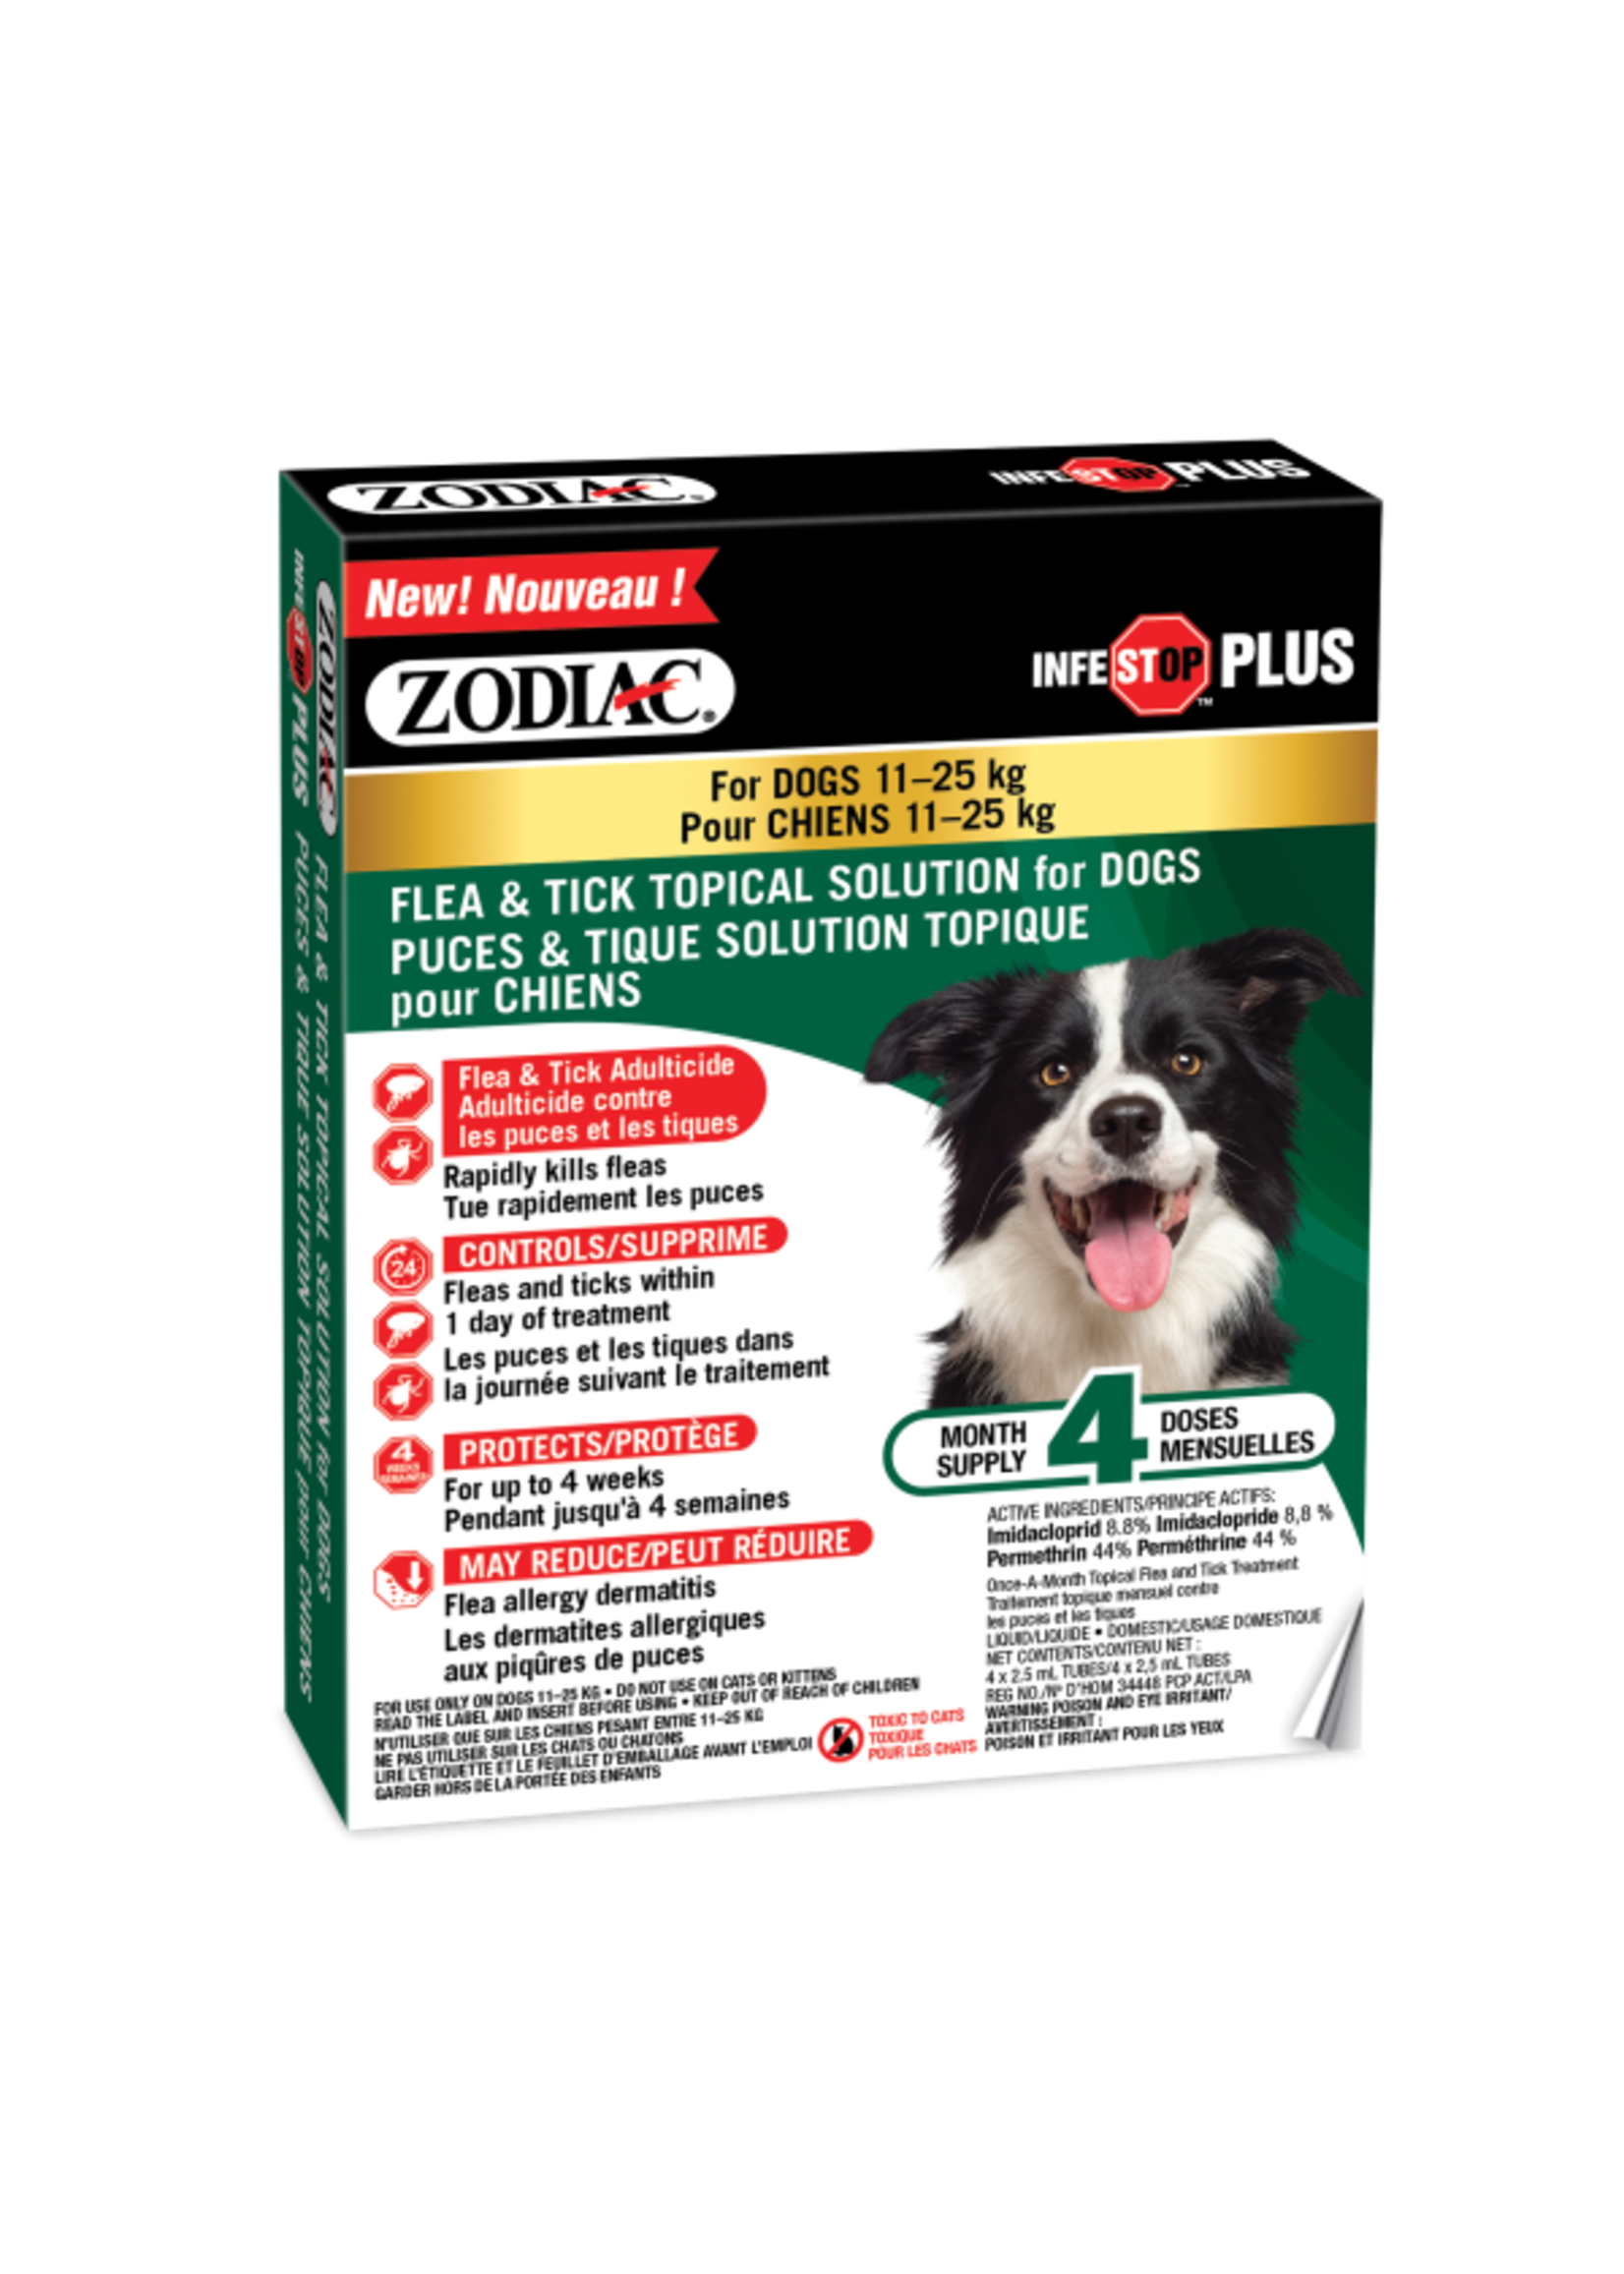 Zodiac Zodiac - Infestop Plus Dogs (Flea & Tick) 11kg to 25kg